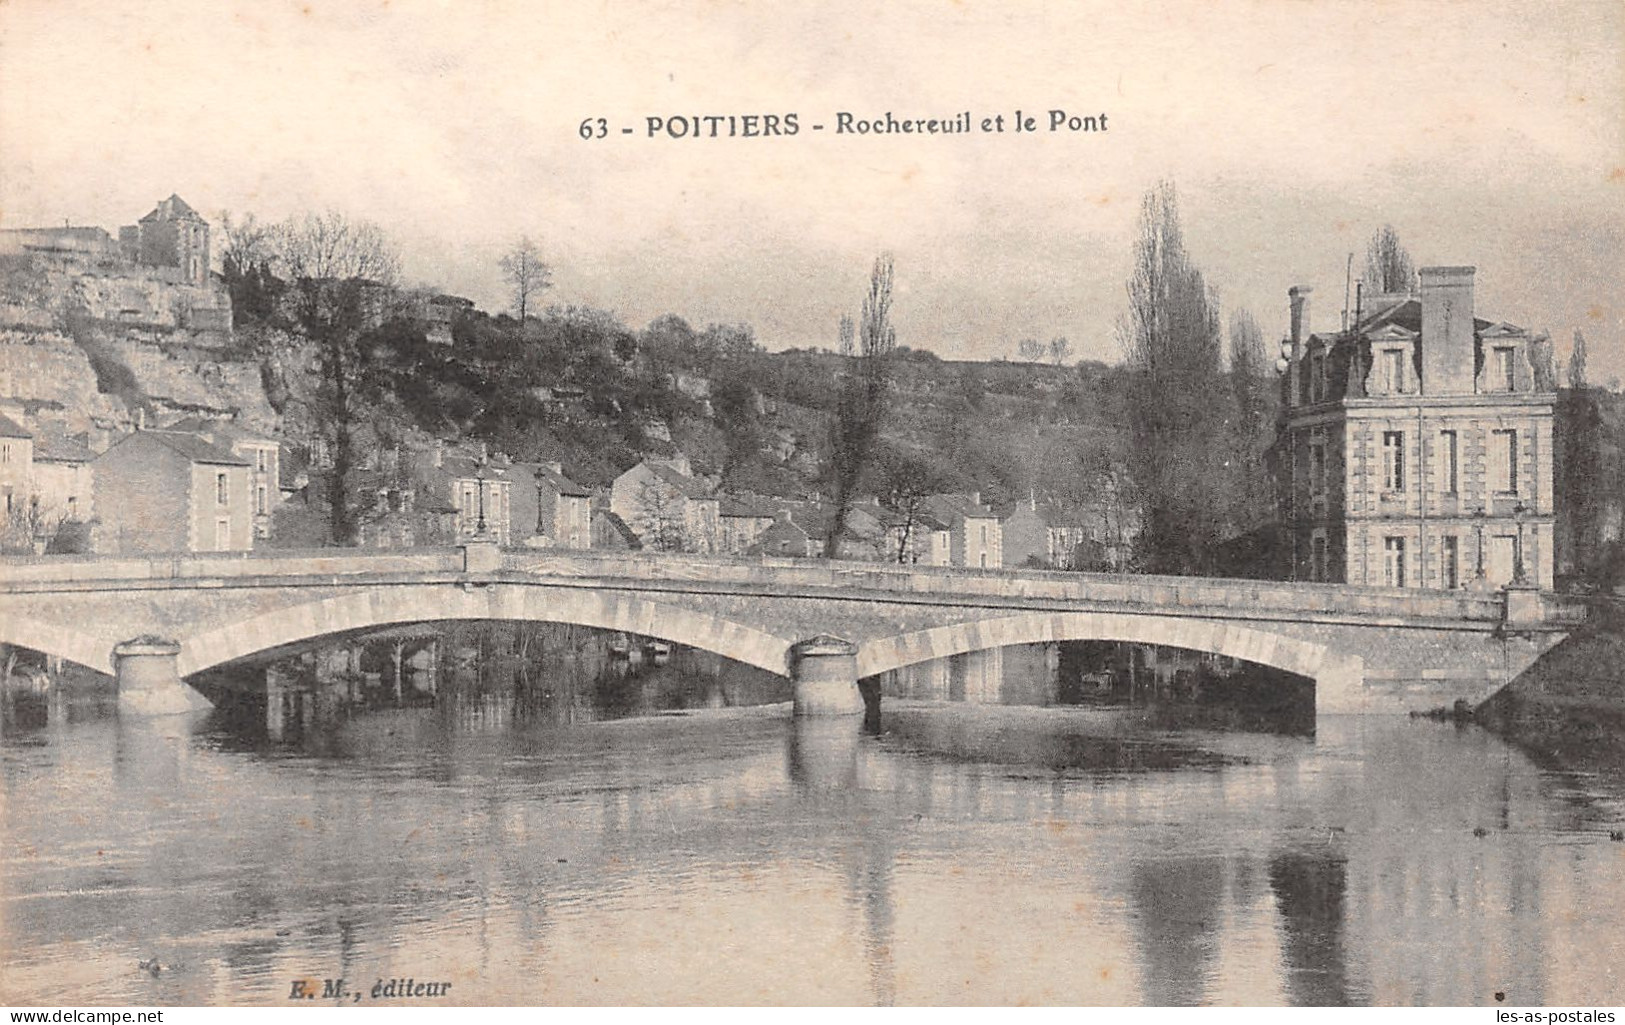 86 POITIERS - Poitiers